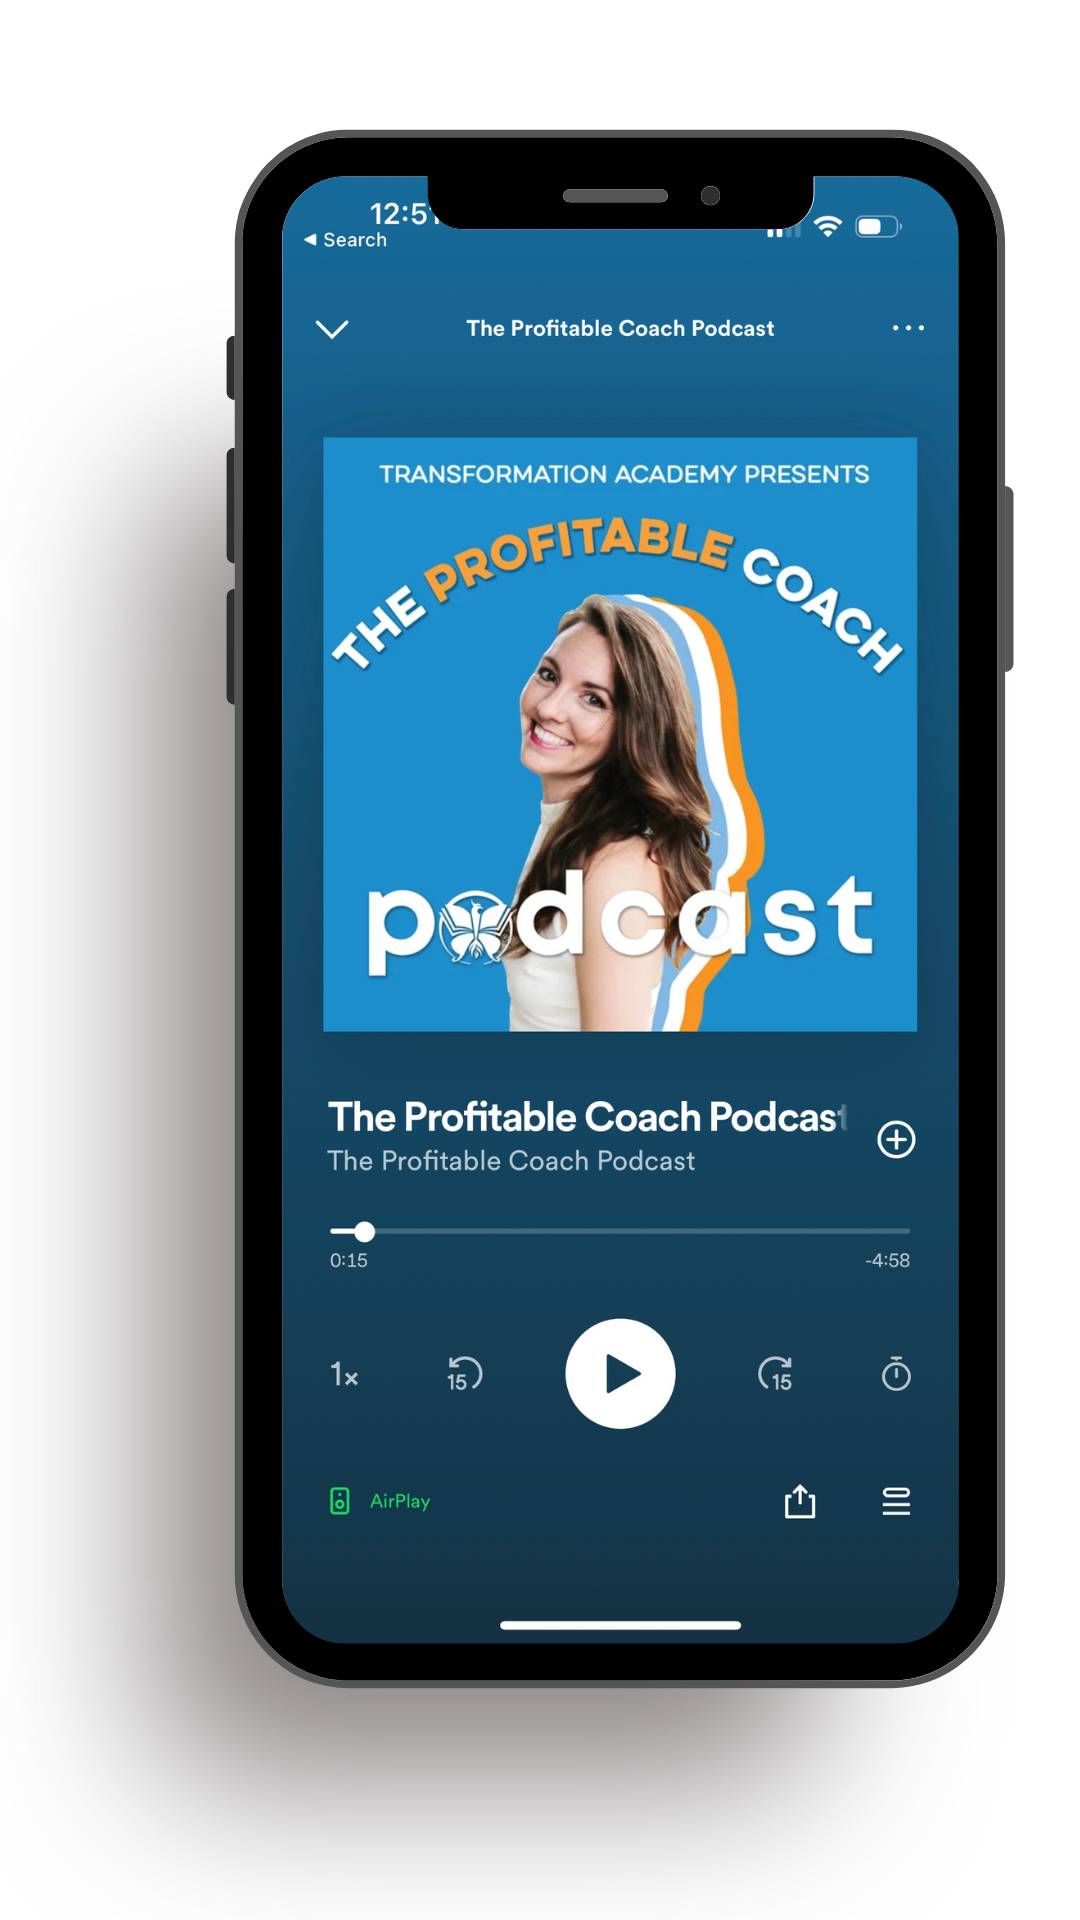 The Profitable Coach Podcast